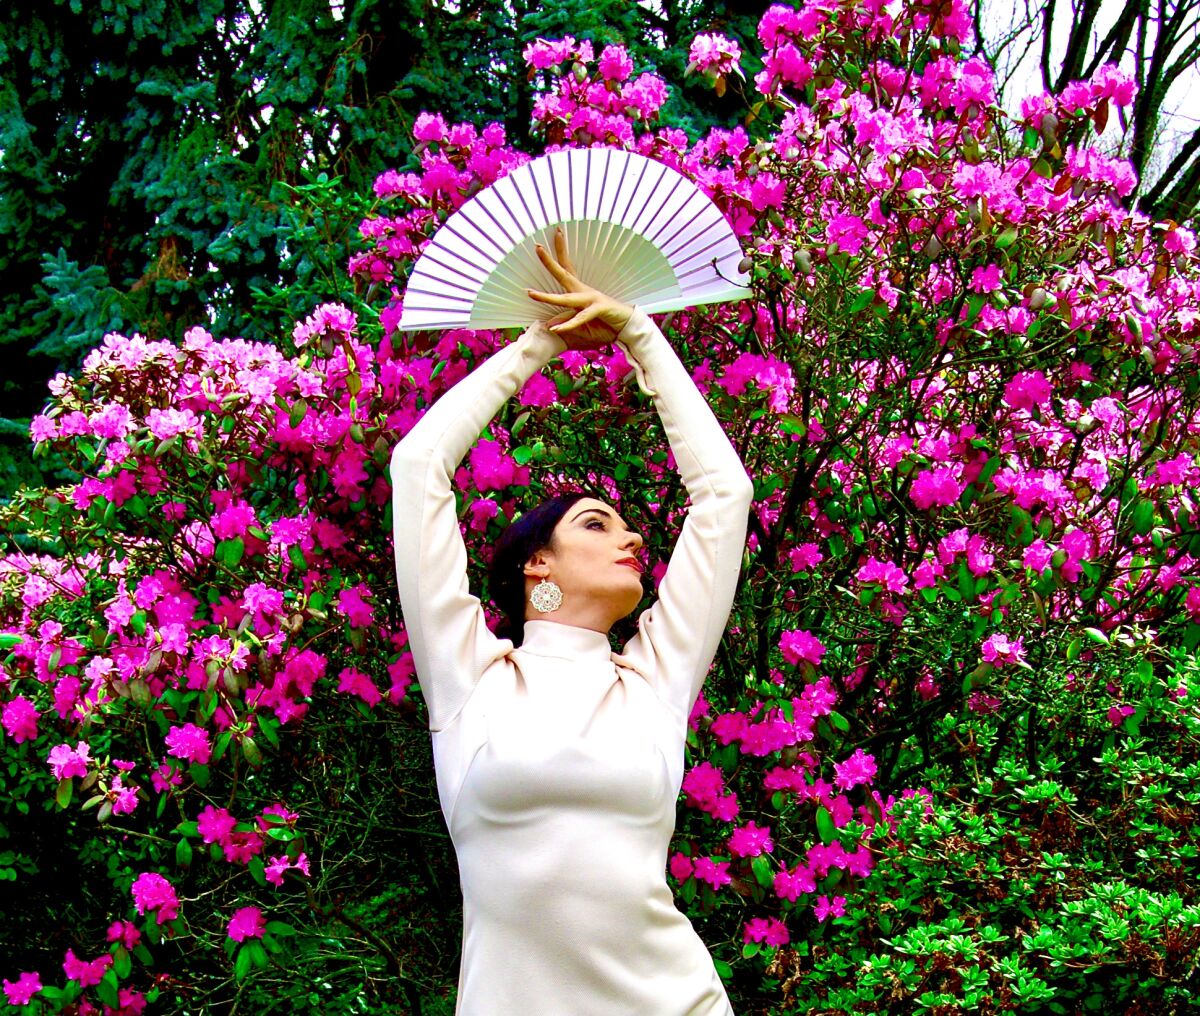 Flamenco dancer Savannah Fuentes